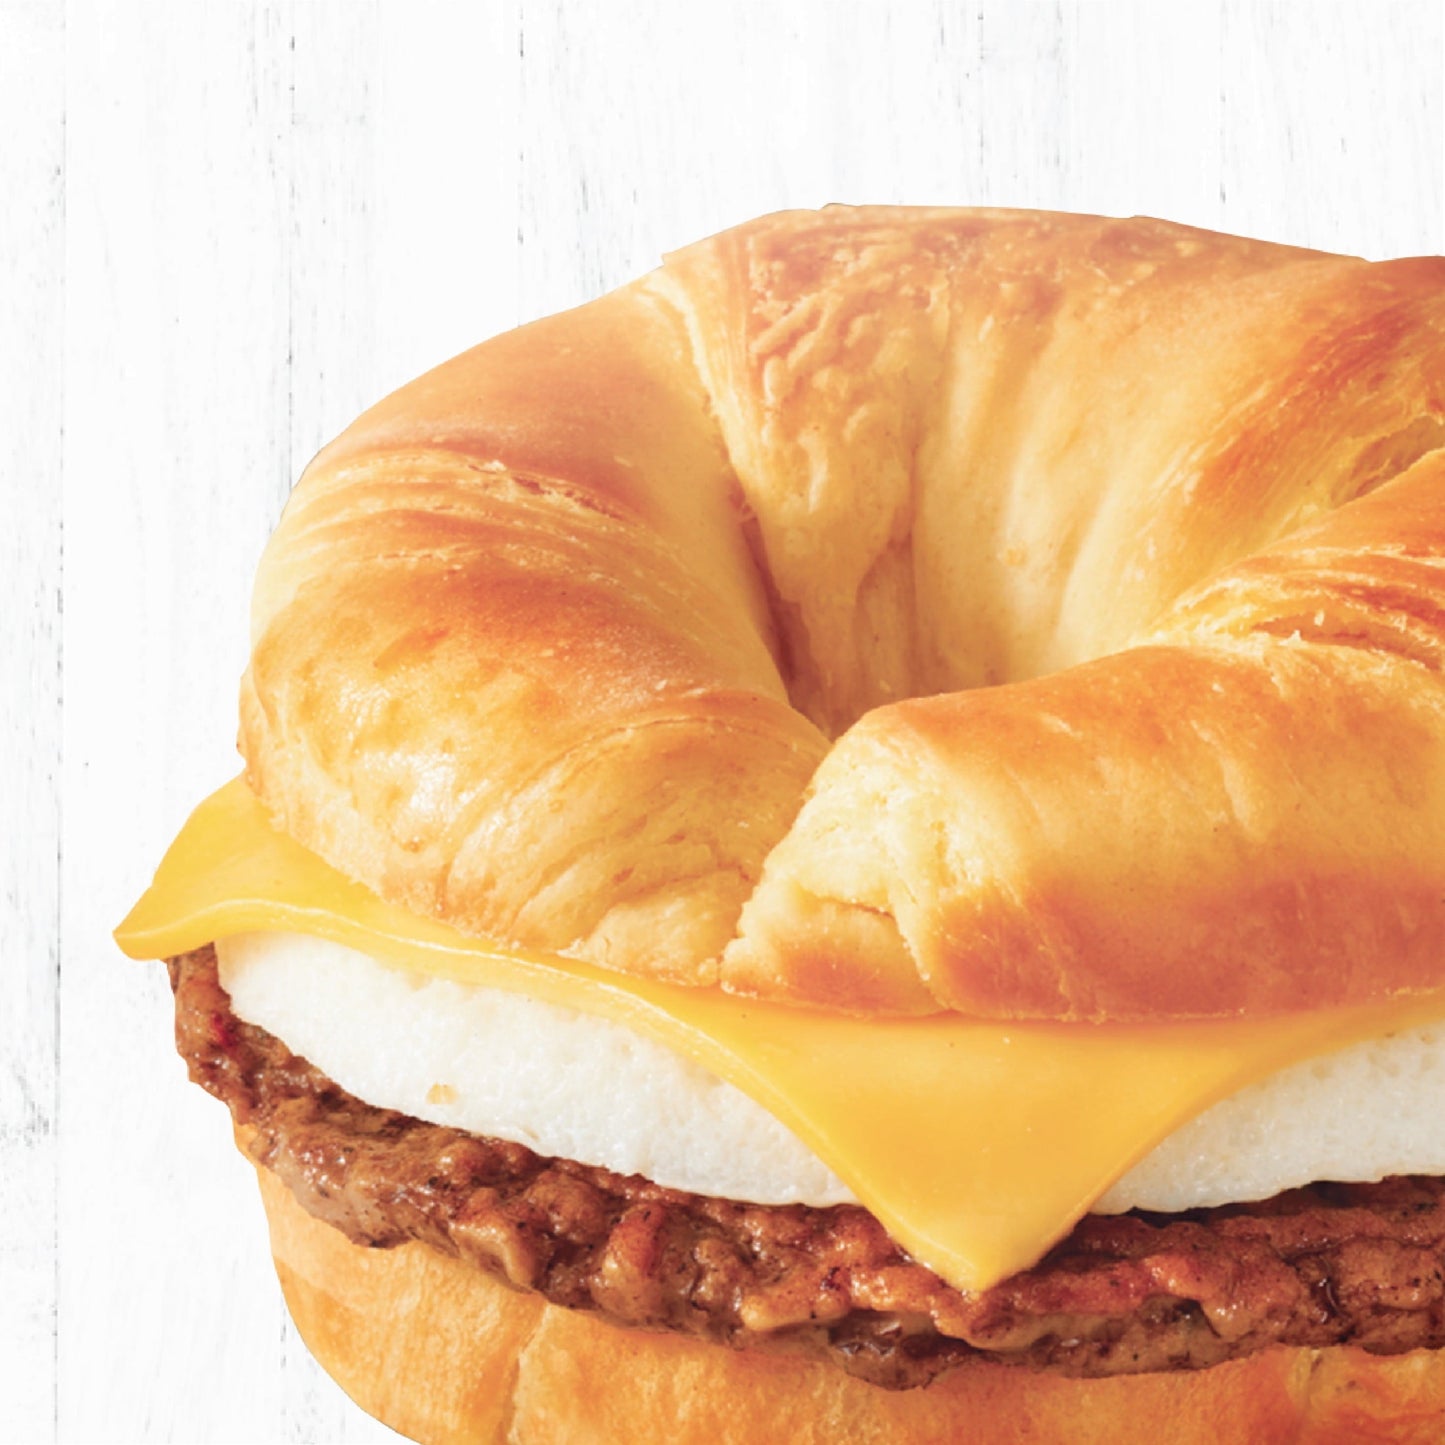 Jimmy Dean Delights Turkey Sausage, Egg White & Cheese Croissant Sandwiches, 19.2 oz, 4 Ct (Frozen)